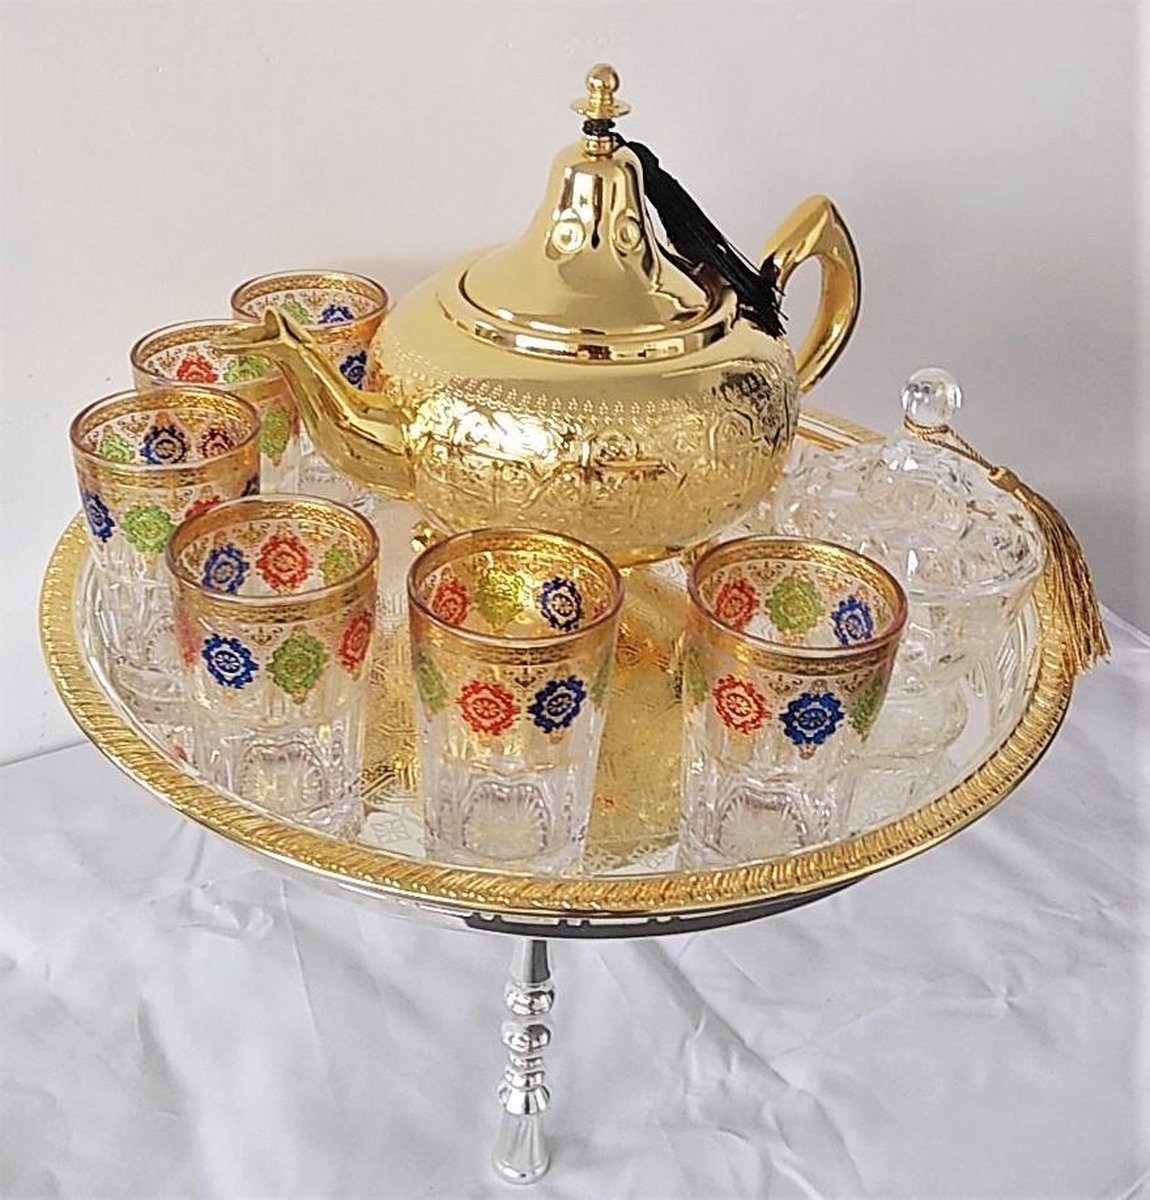 Complete Marokkaanse theeset, met gouden theepot, Marokkaanse dienblad met... bol.com